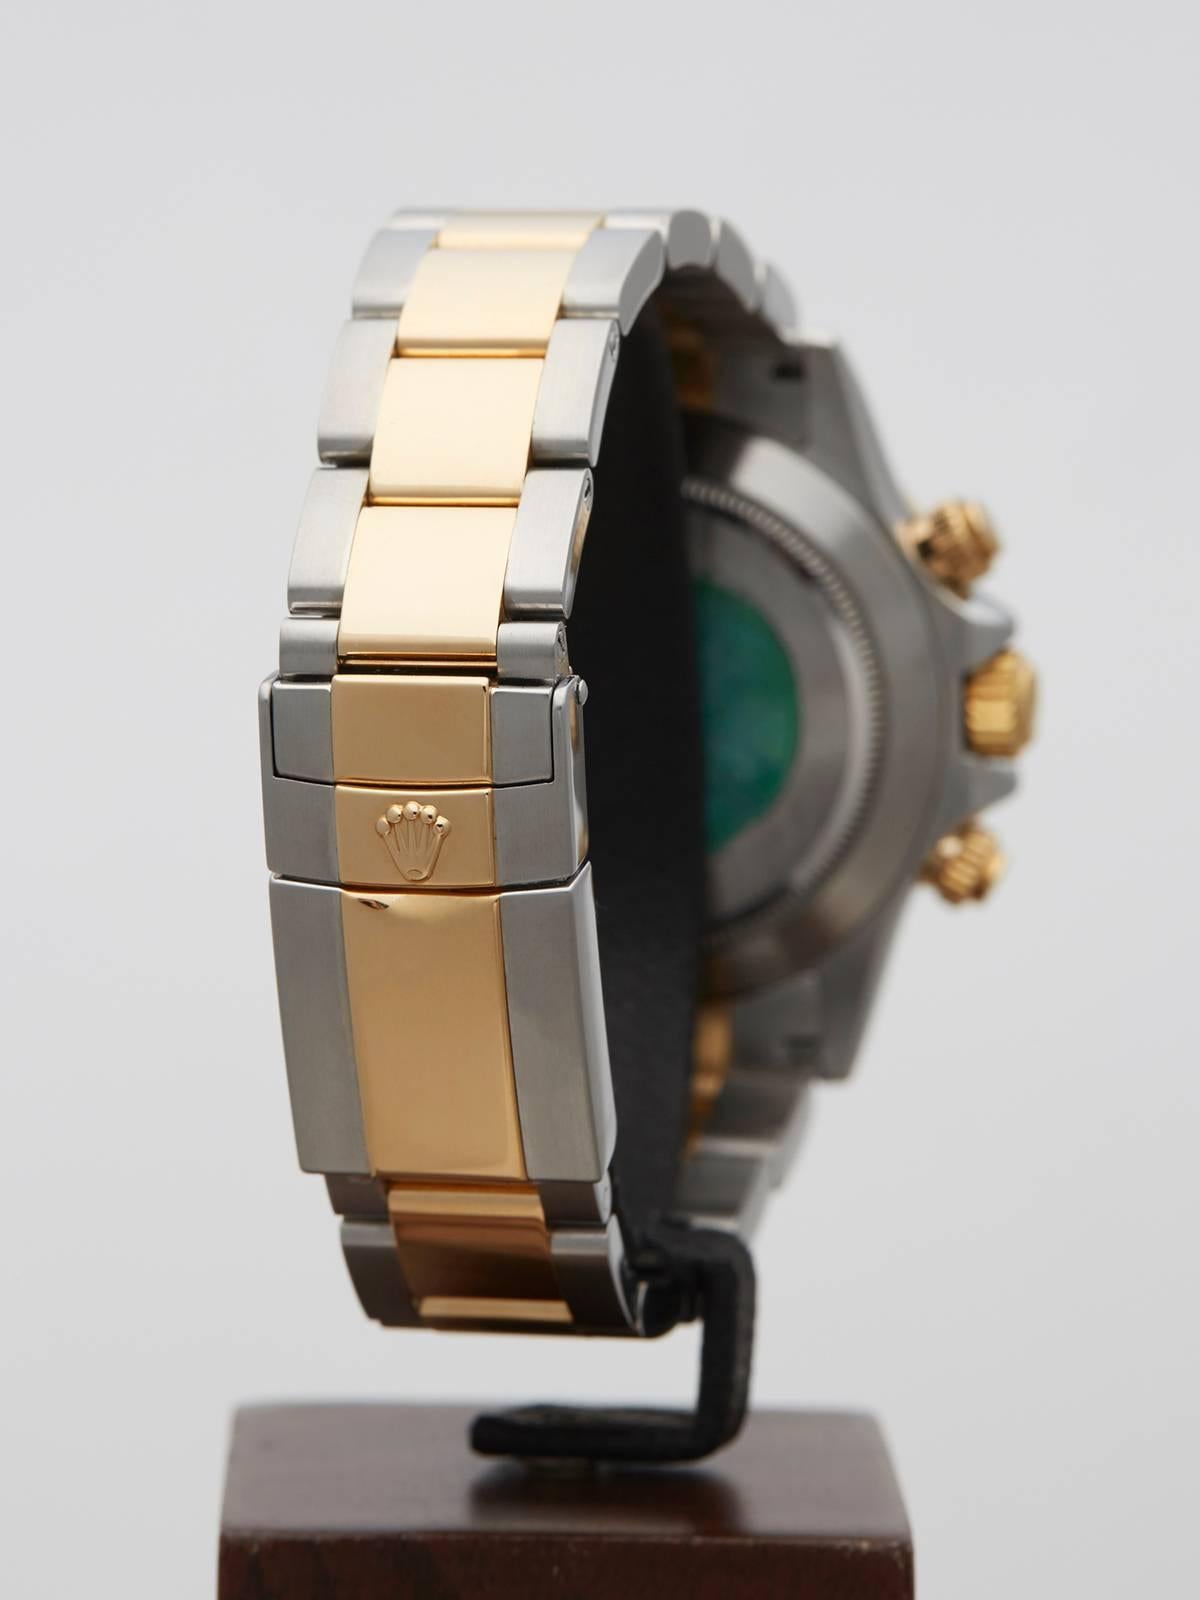 Rolex Daytona Gold Steel cosomograph chronograph Automatic Wristwatch Ref 116523 3